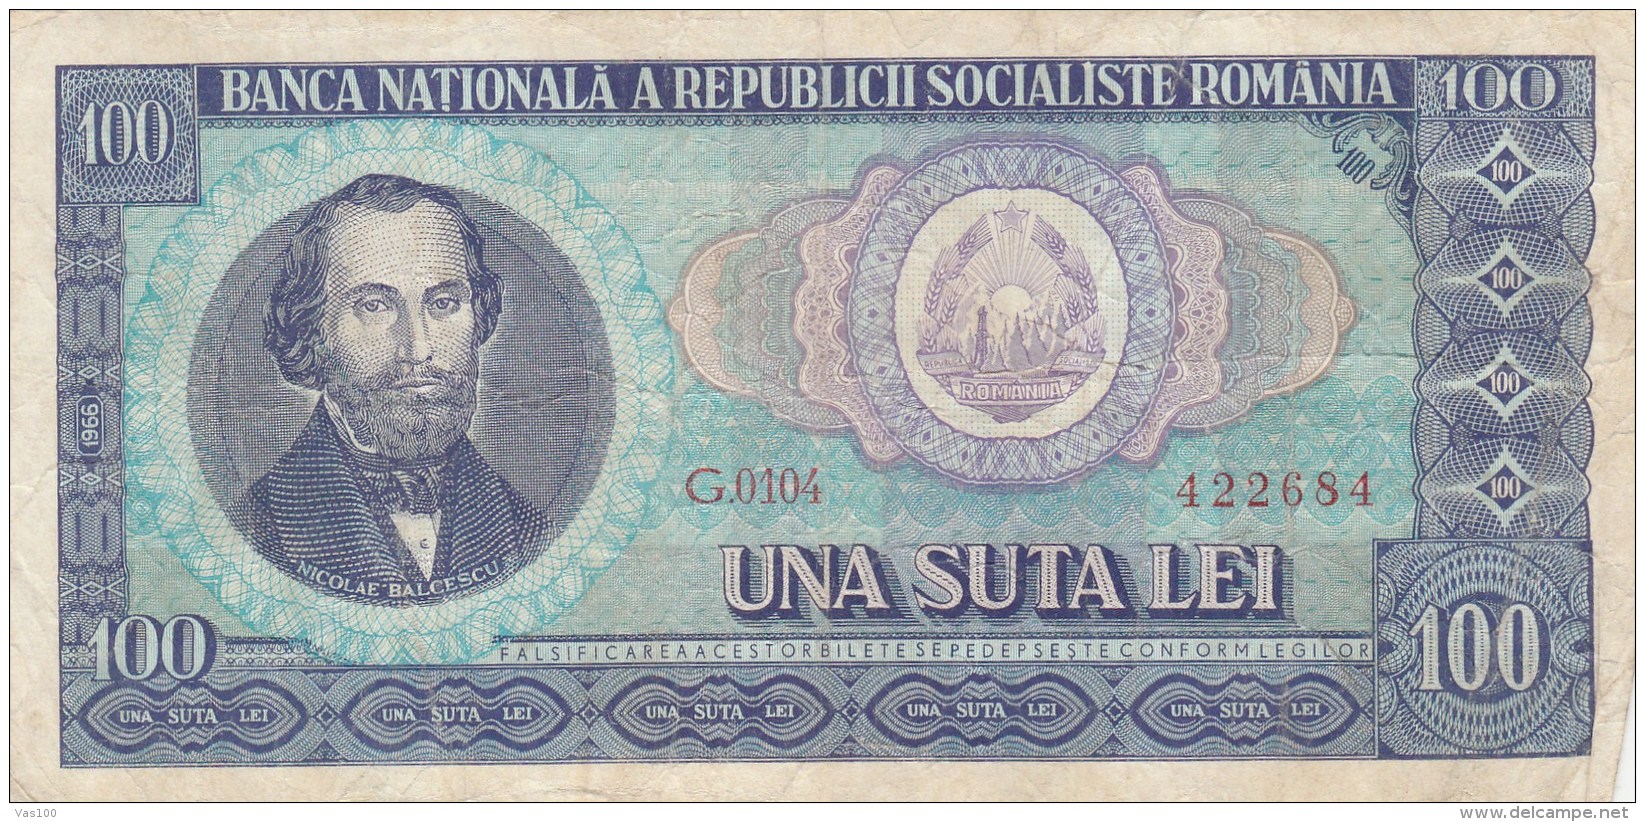 100 LEI, NICOLAE BALCESCU, 1966, PAPER BANKNOTE,ROMANIA. - Rumänien